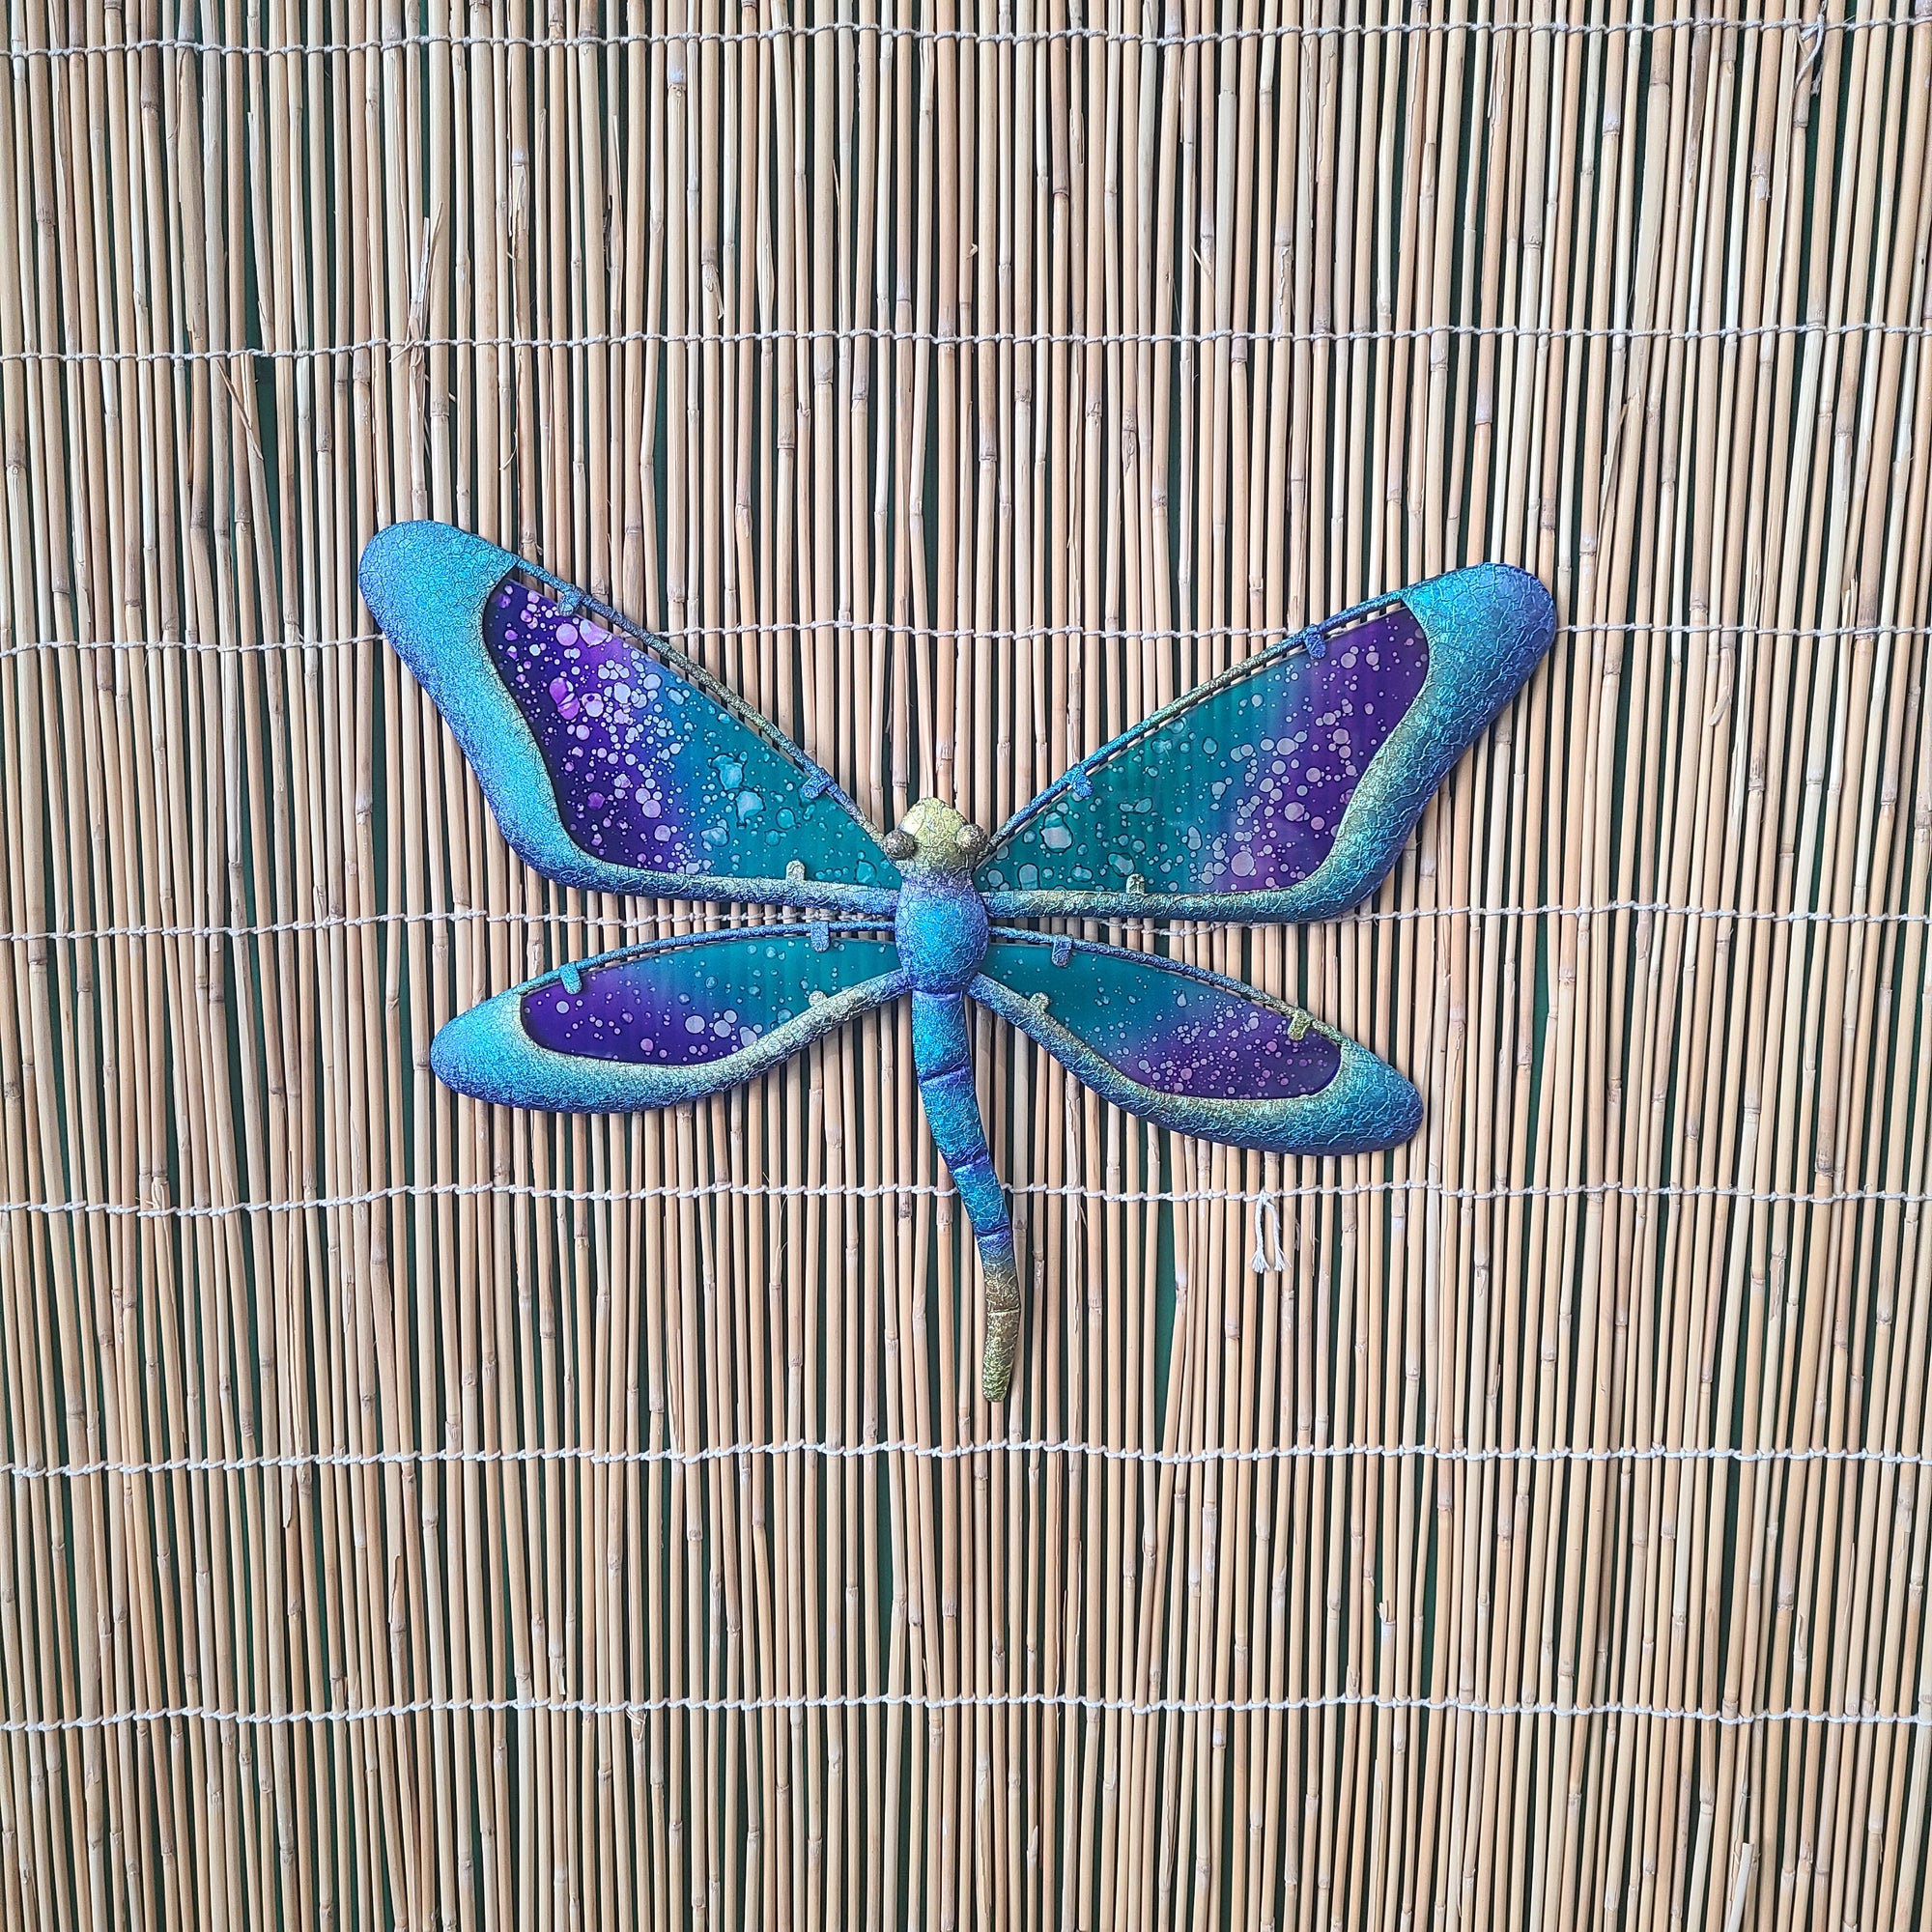 Wall Art Watercolor Dragonfly